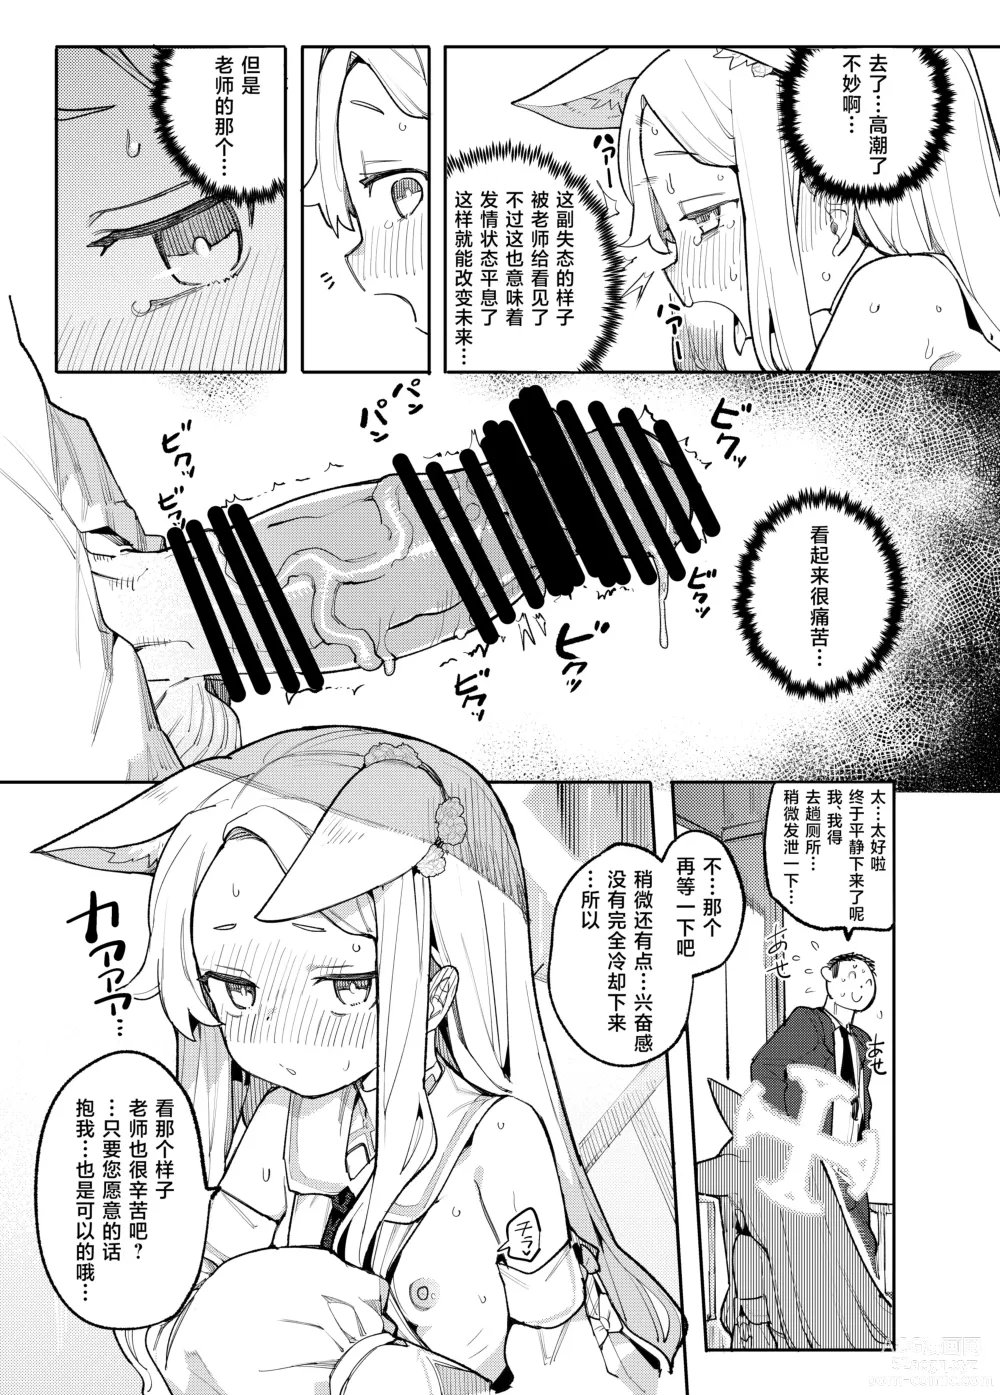 Page 10 of doujinshi 雌性狐狸看到了充满色情的未来